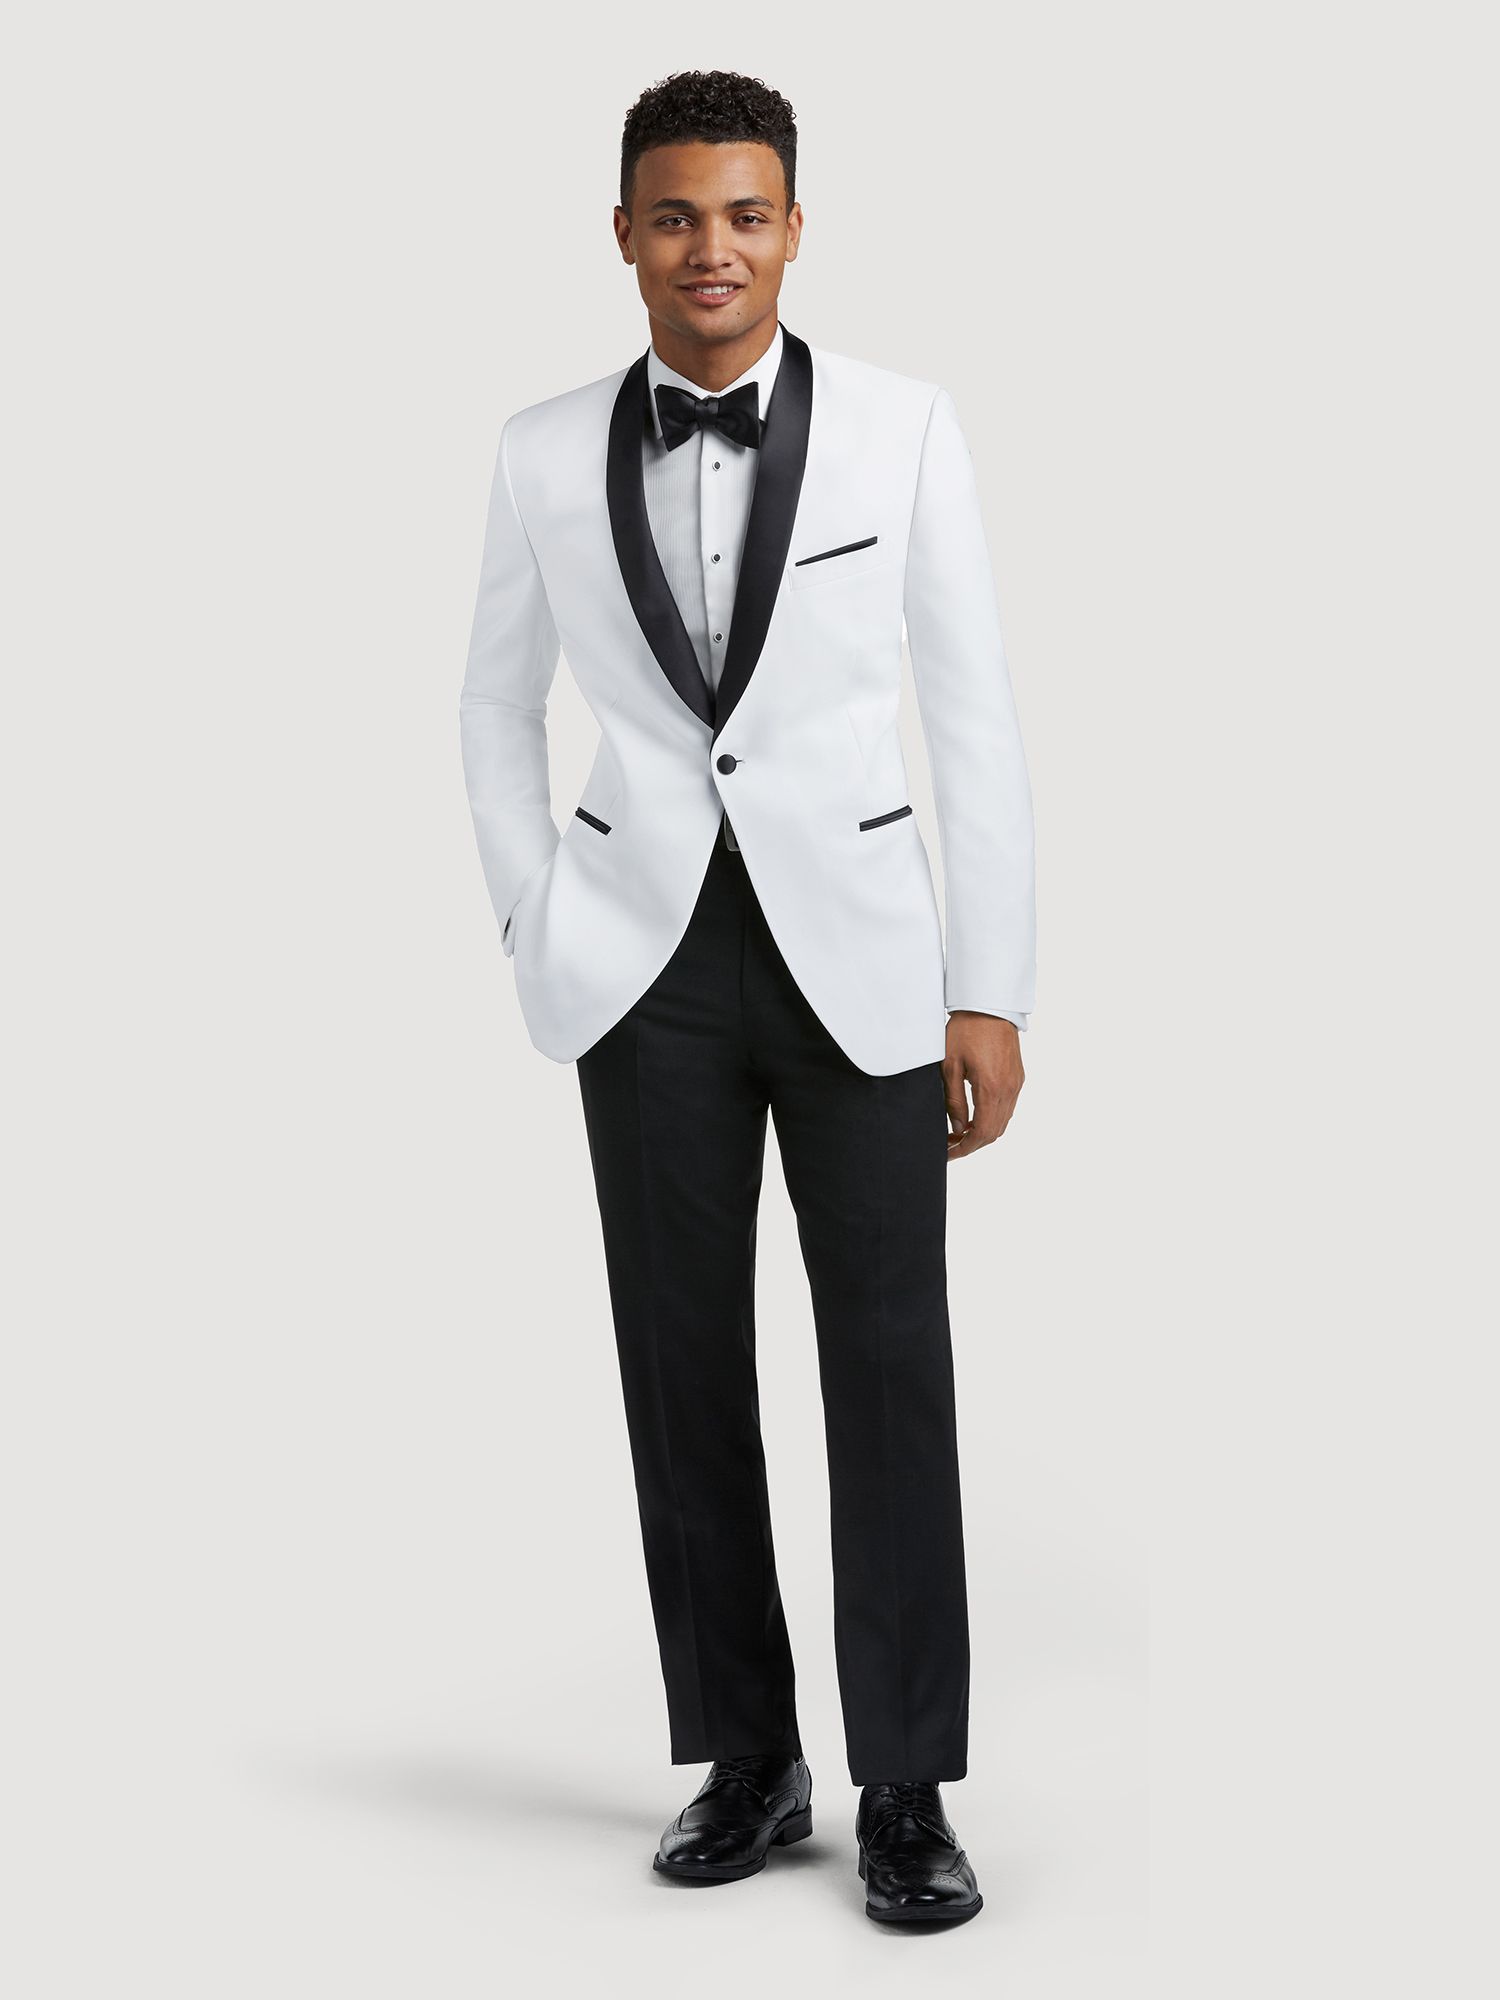 Men Prom Suit - WordPress Blog